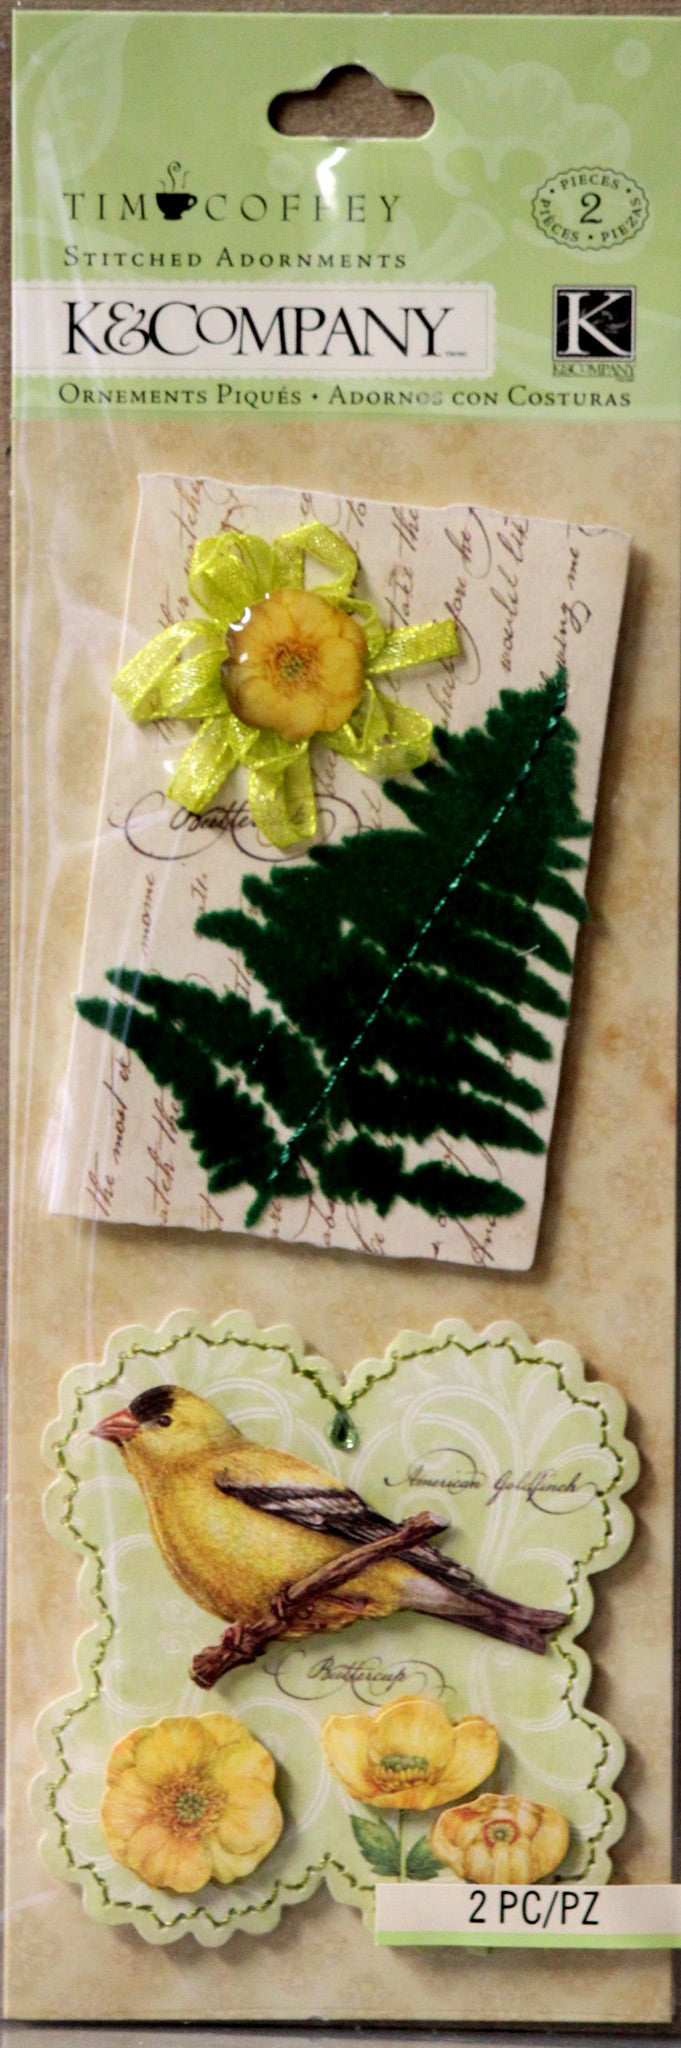 K & Company Tim Coffey Foliage Buttercup Stitched Adornments Dimensional Embellishments Stickers - SCRAPBOOKFARE